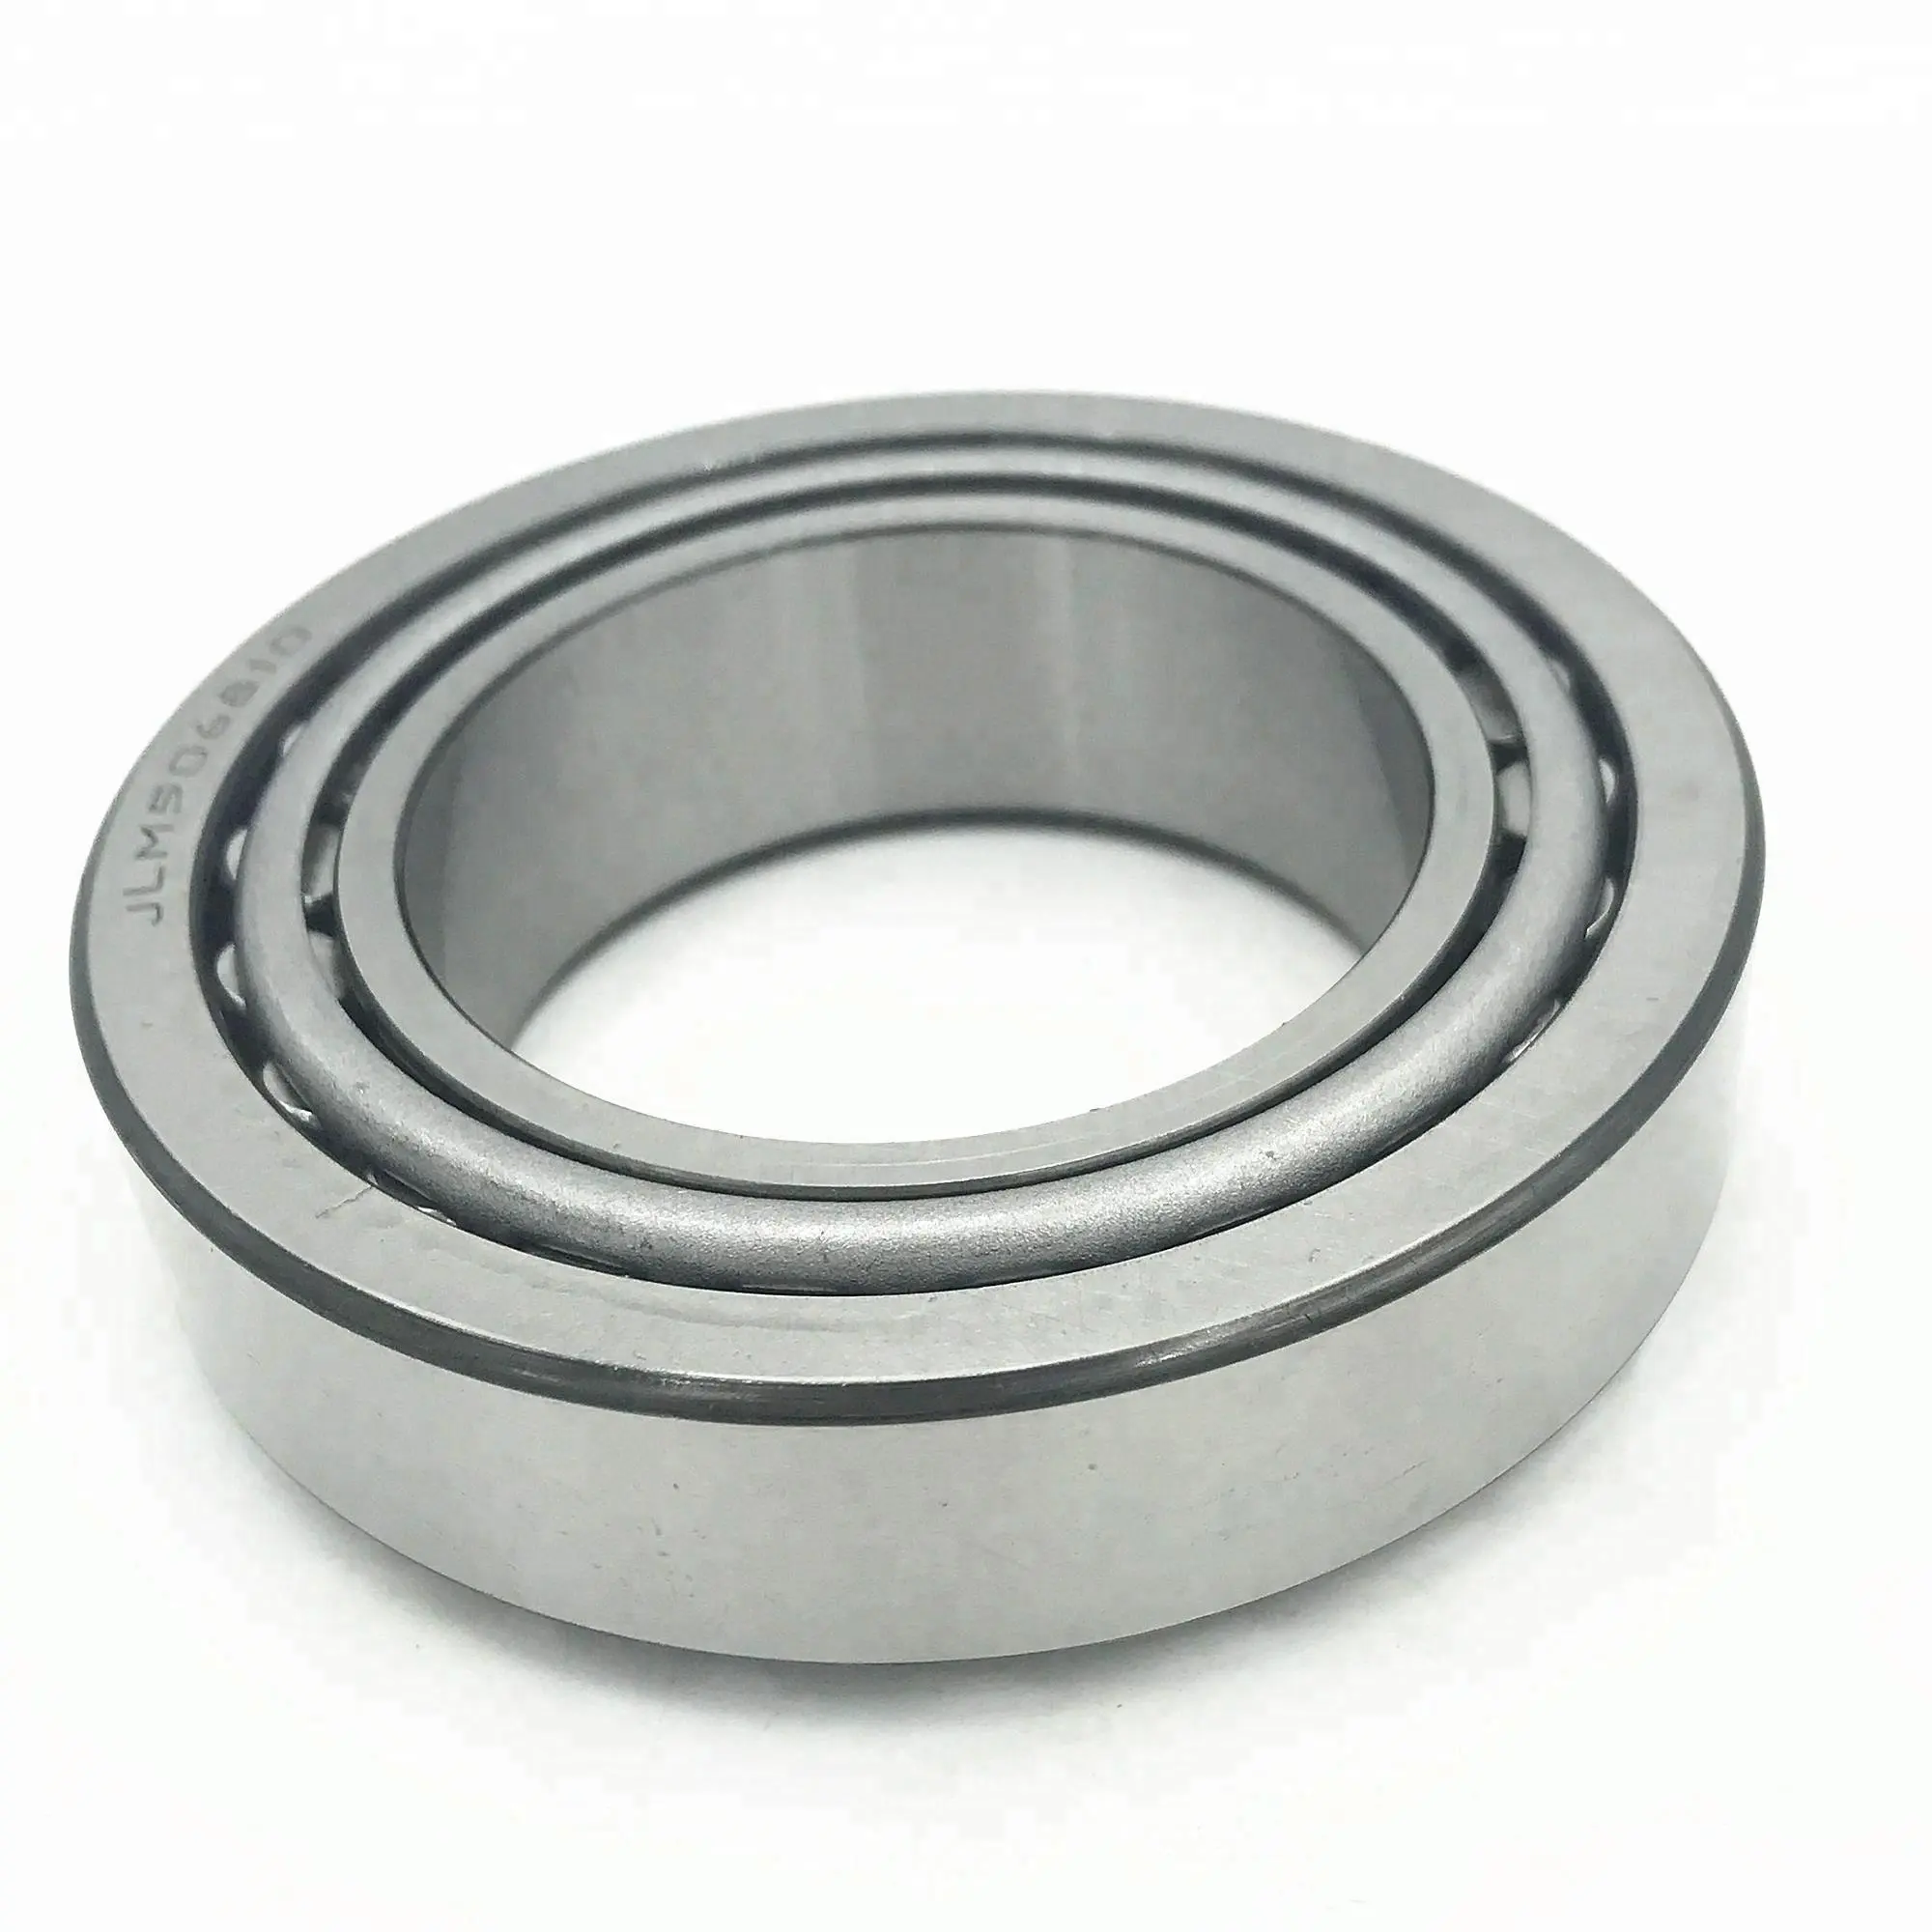 65225/65500 Jepang asli kualitas nonstandar murah tapered roller bearing kandang baja 65225-65500